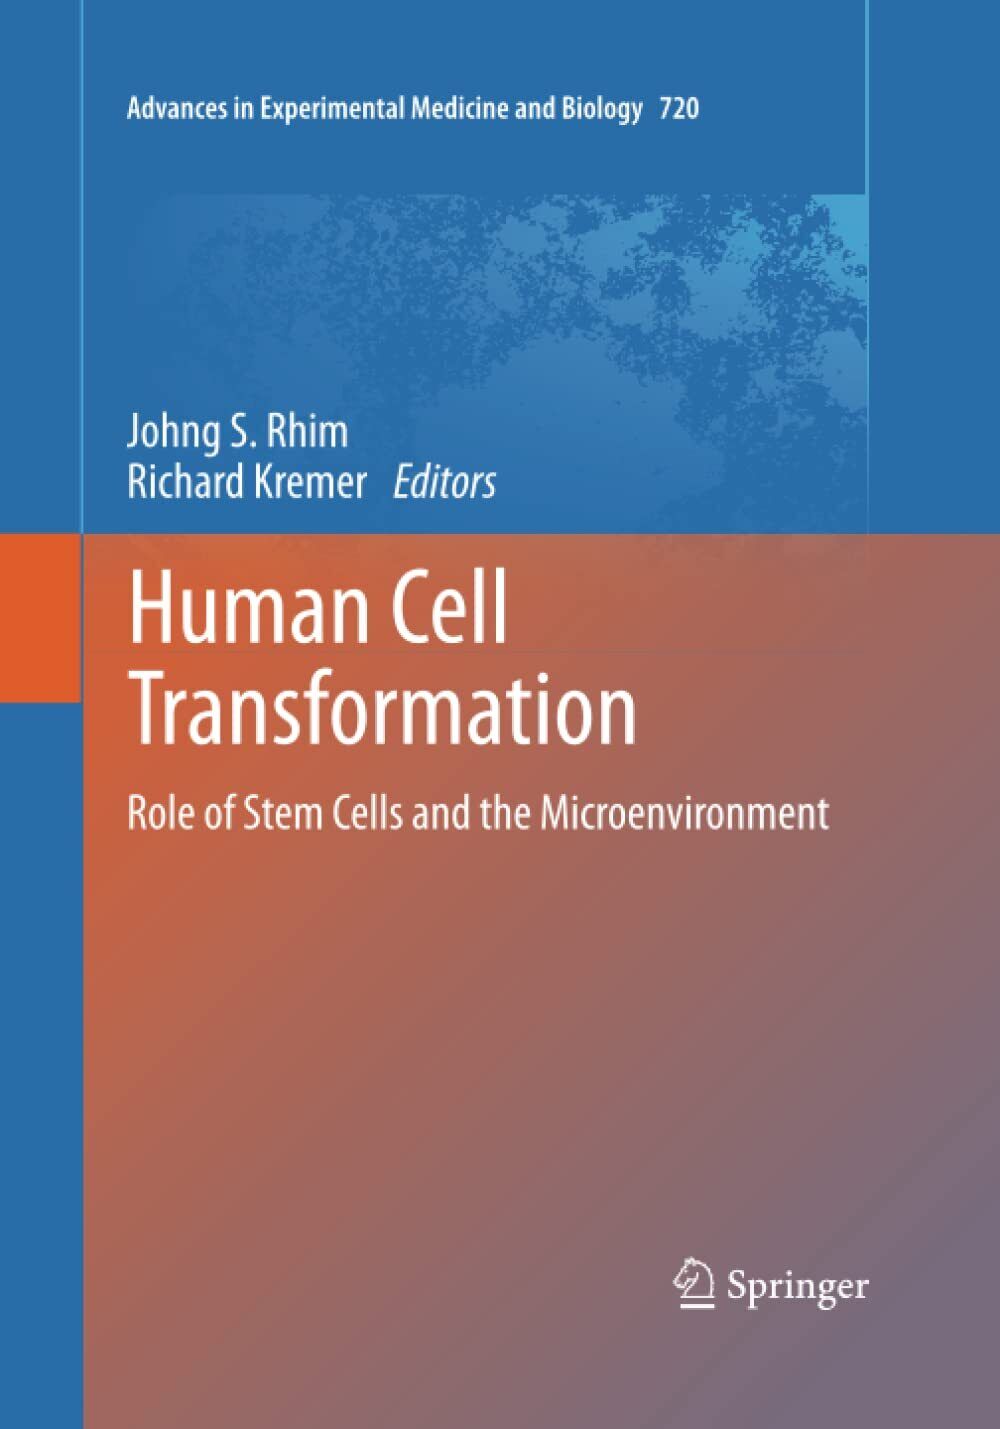 Human Cell Transformation - Johng S. Rhim - Springer, 2016